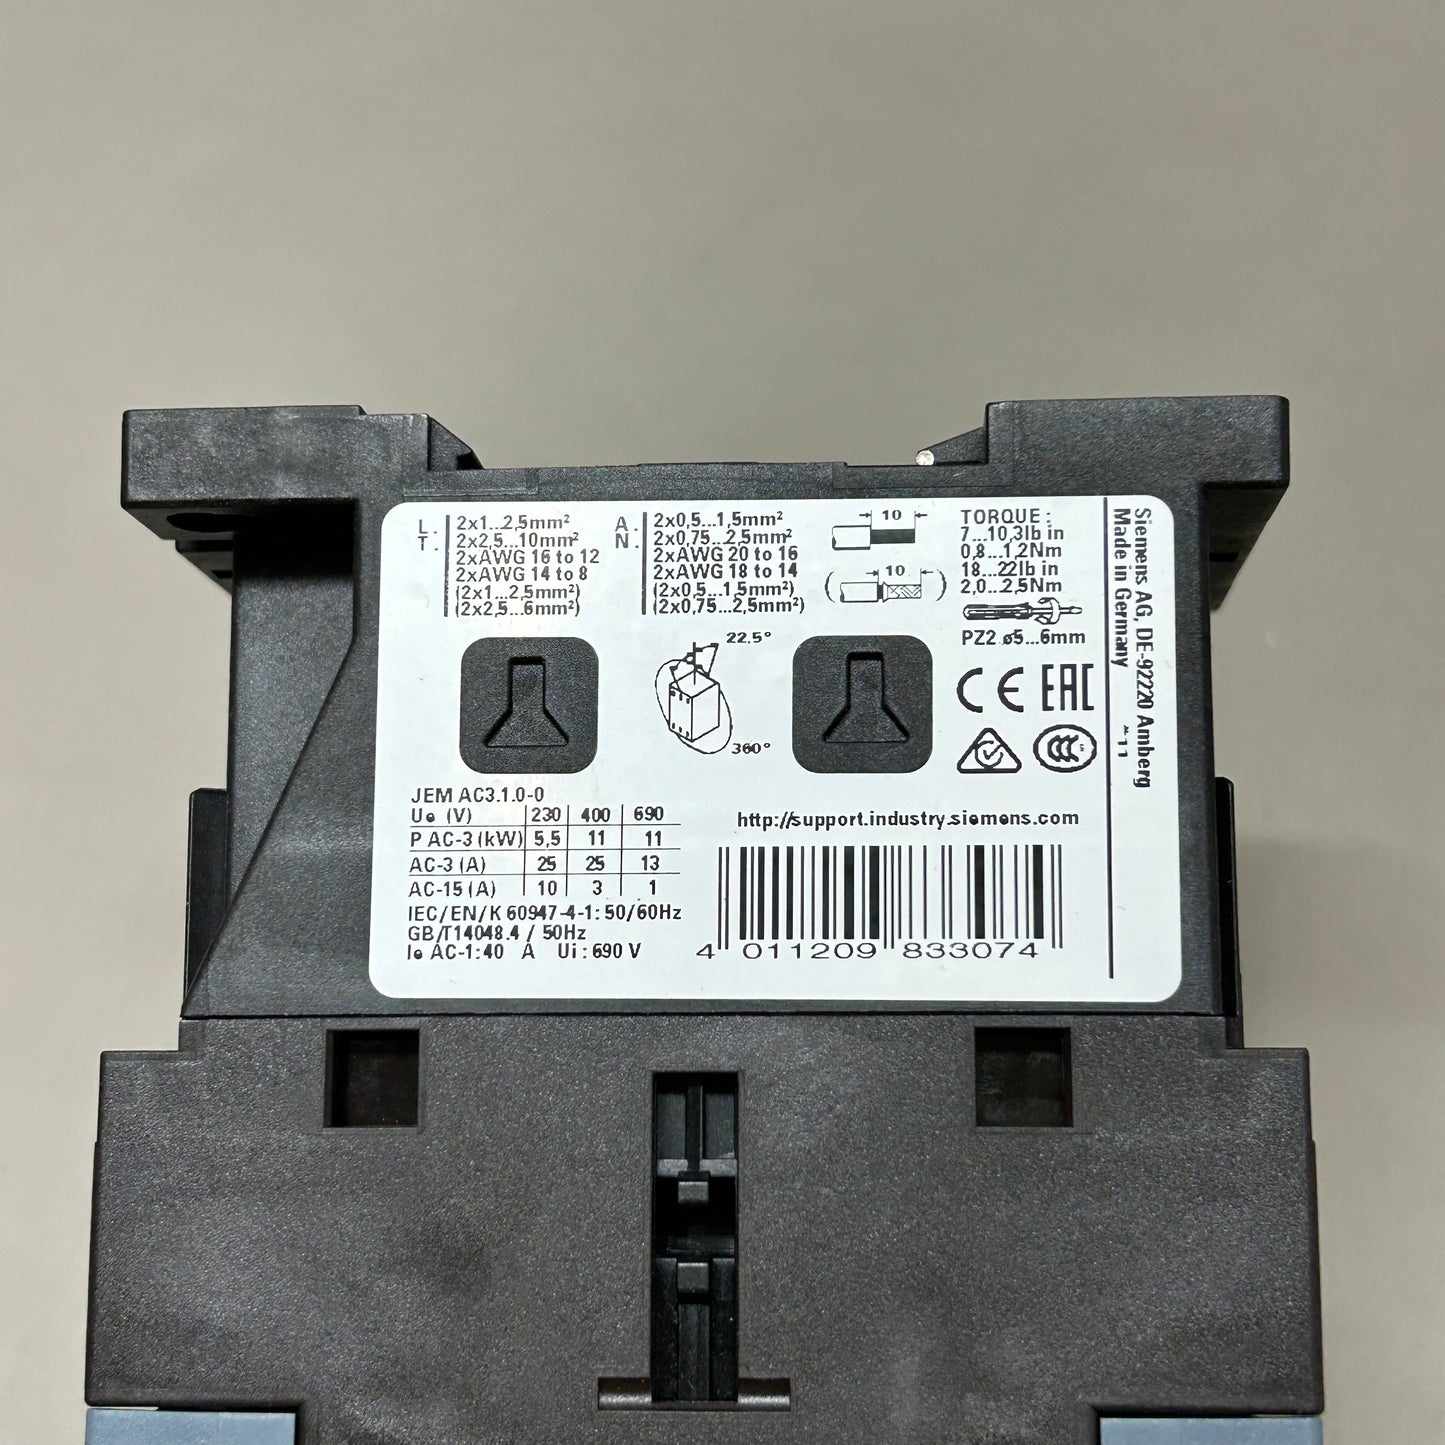 SIEMENS Power Contactor 3-Pole 24V 50Hz Black Sz S0 3RT2026-1AB00 (New)